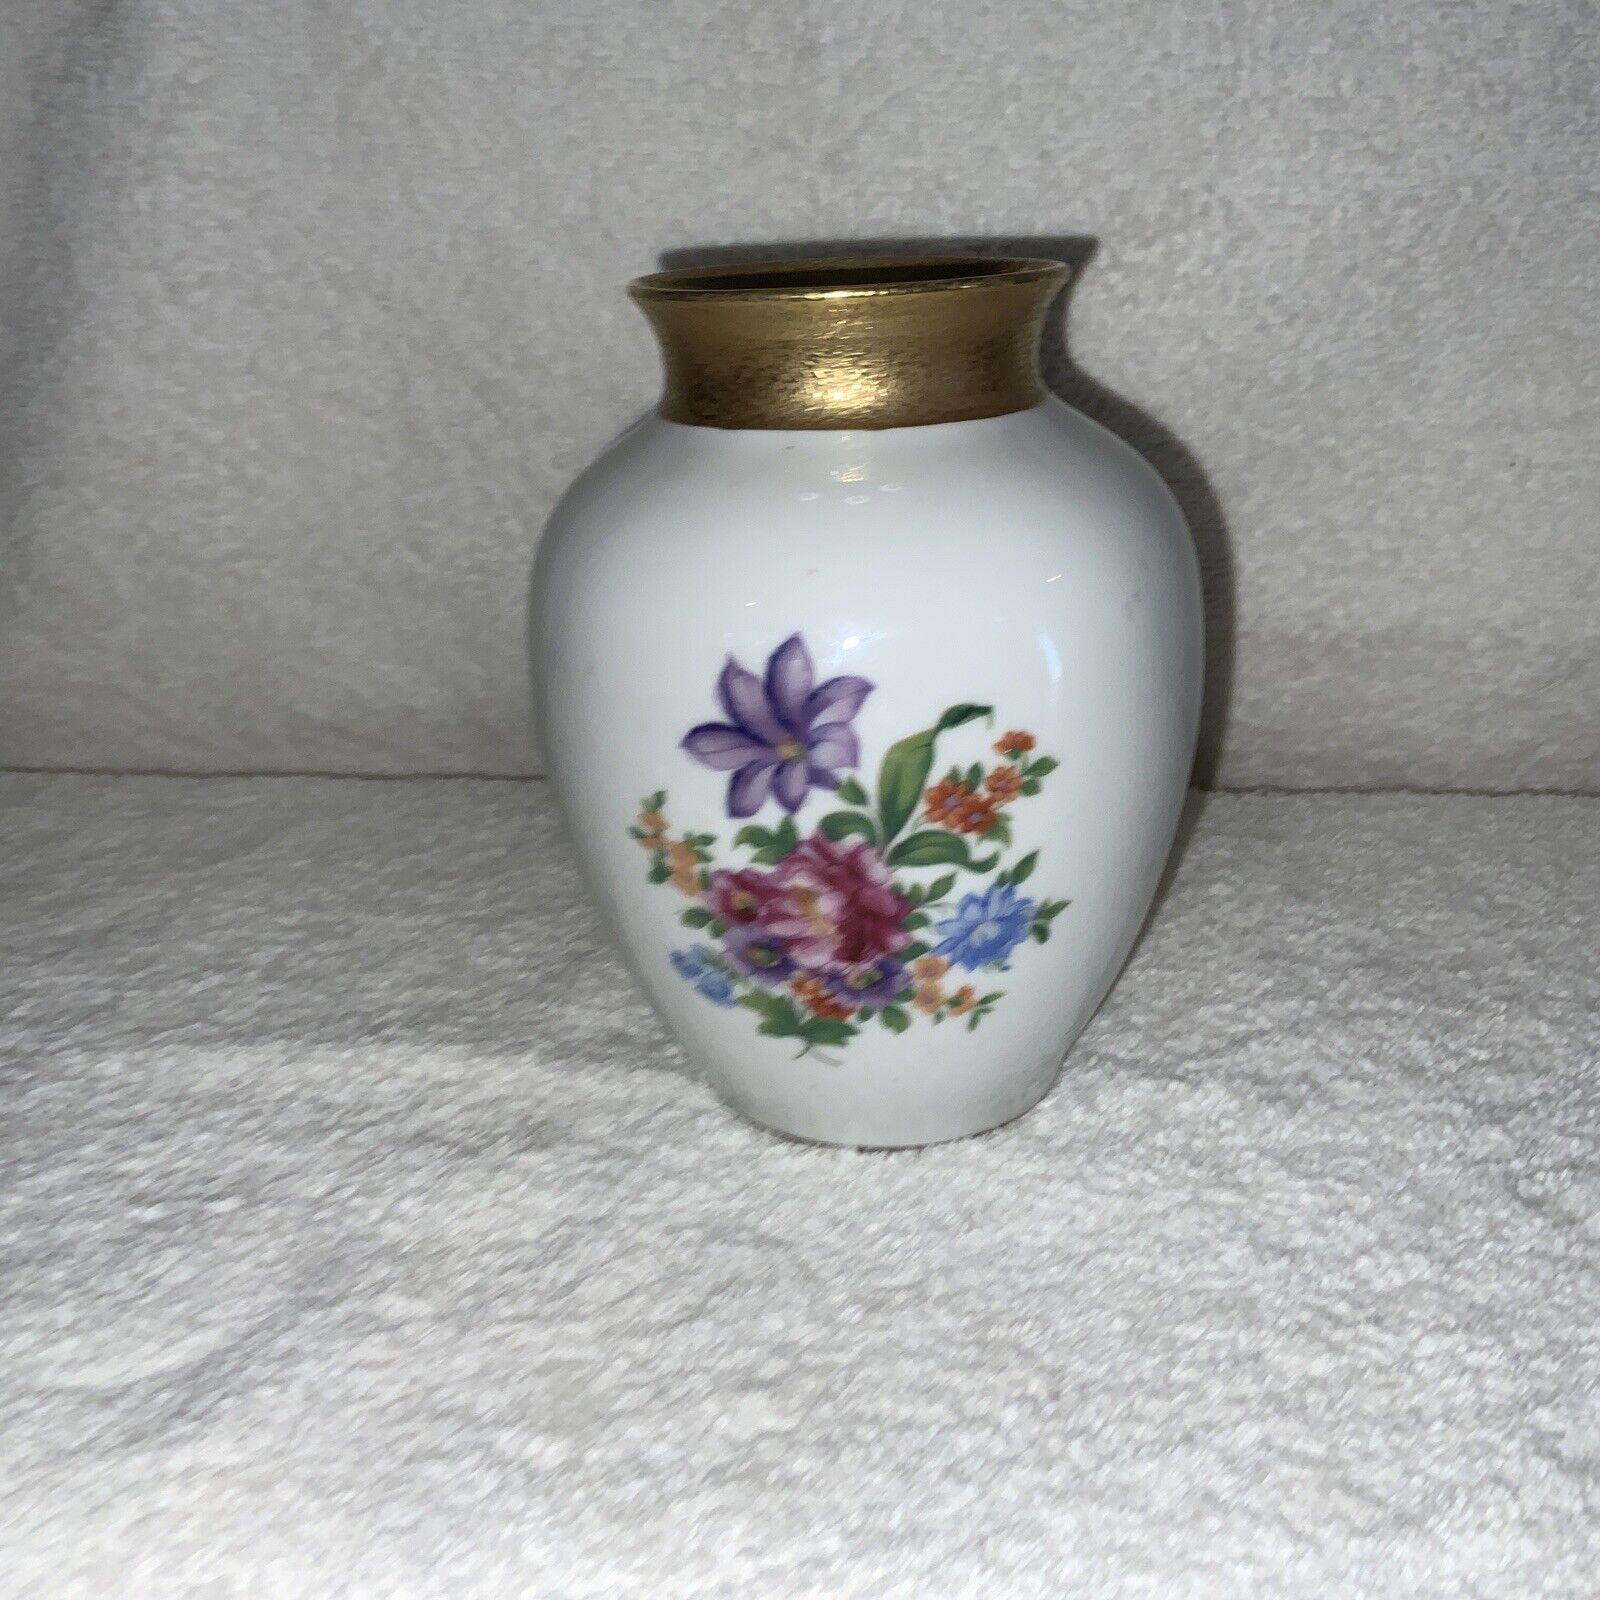 JLMENAU Graf Von Kenneberg Porcelain Vase